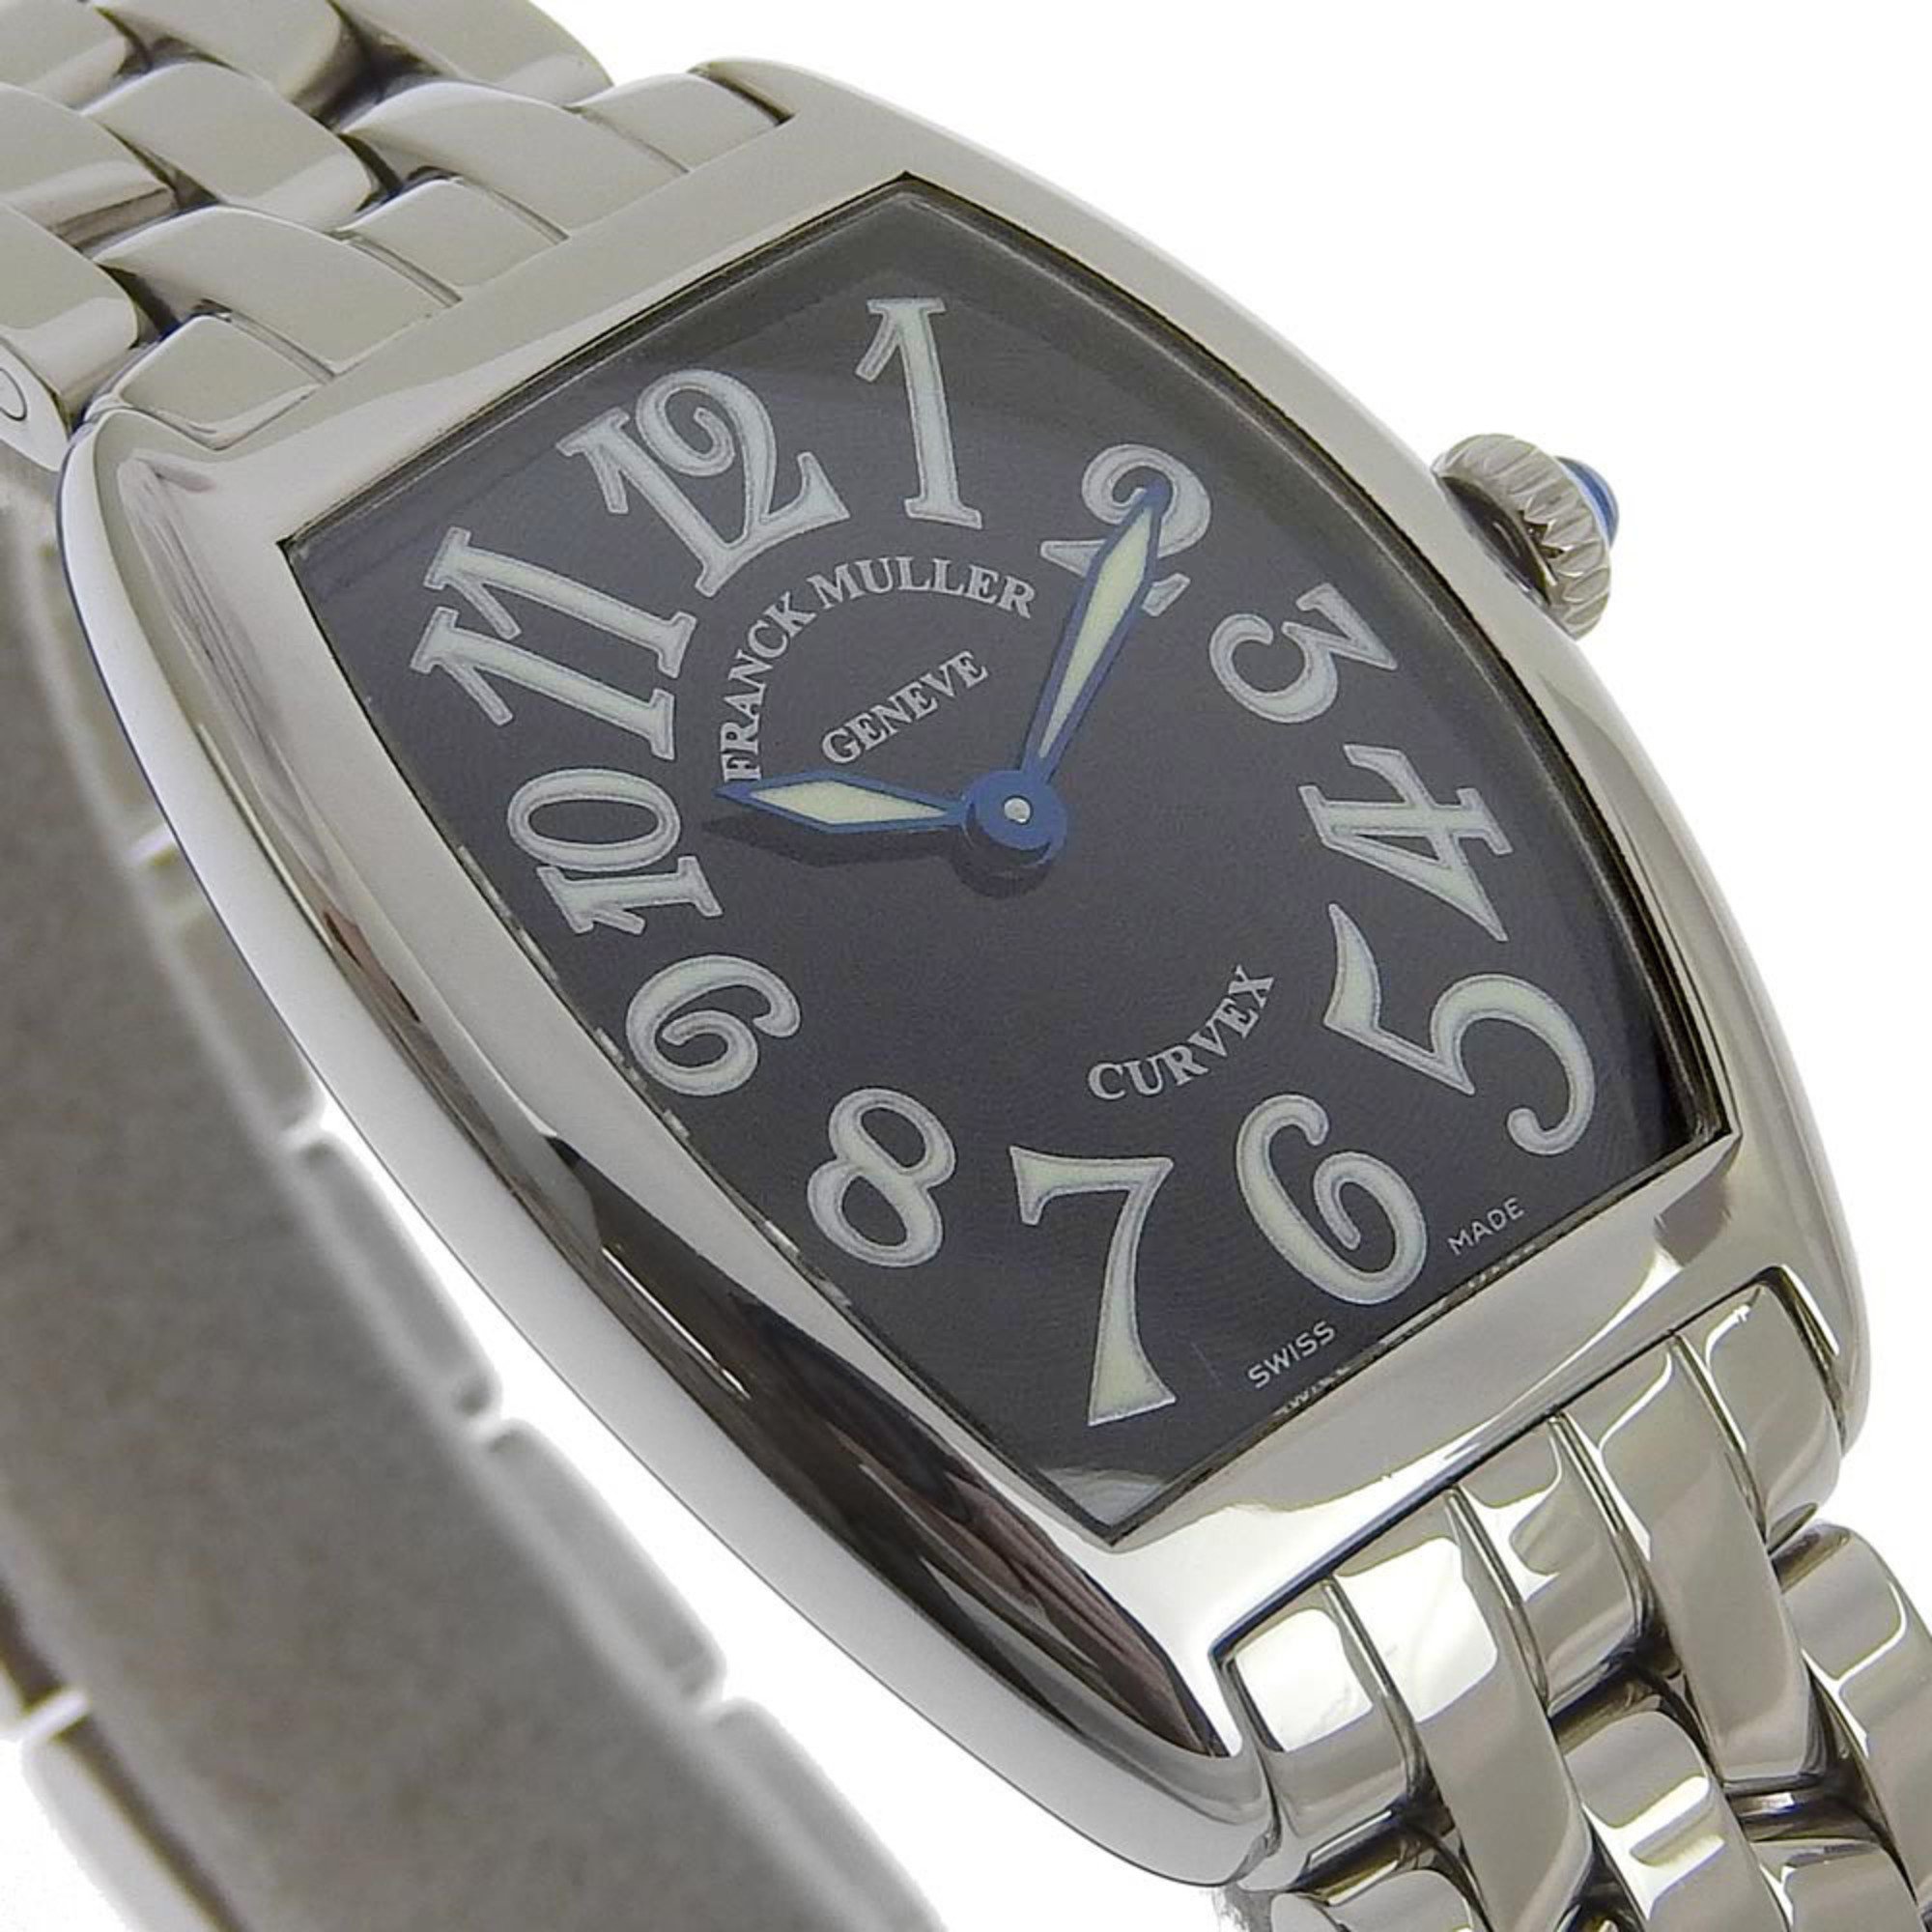 FRANCK MULLER Franck Muller Tonneau curvex 1752QZ stainless steel quartz analog display ladies black dial watch